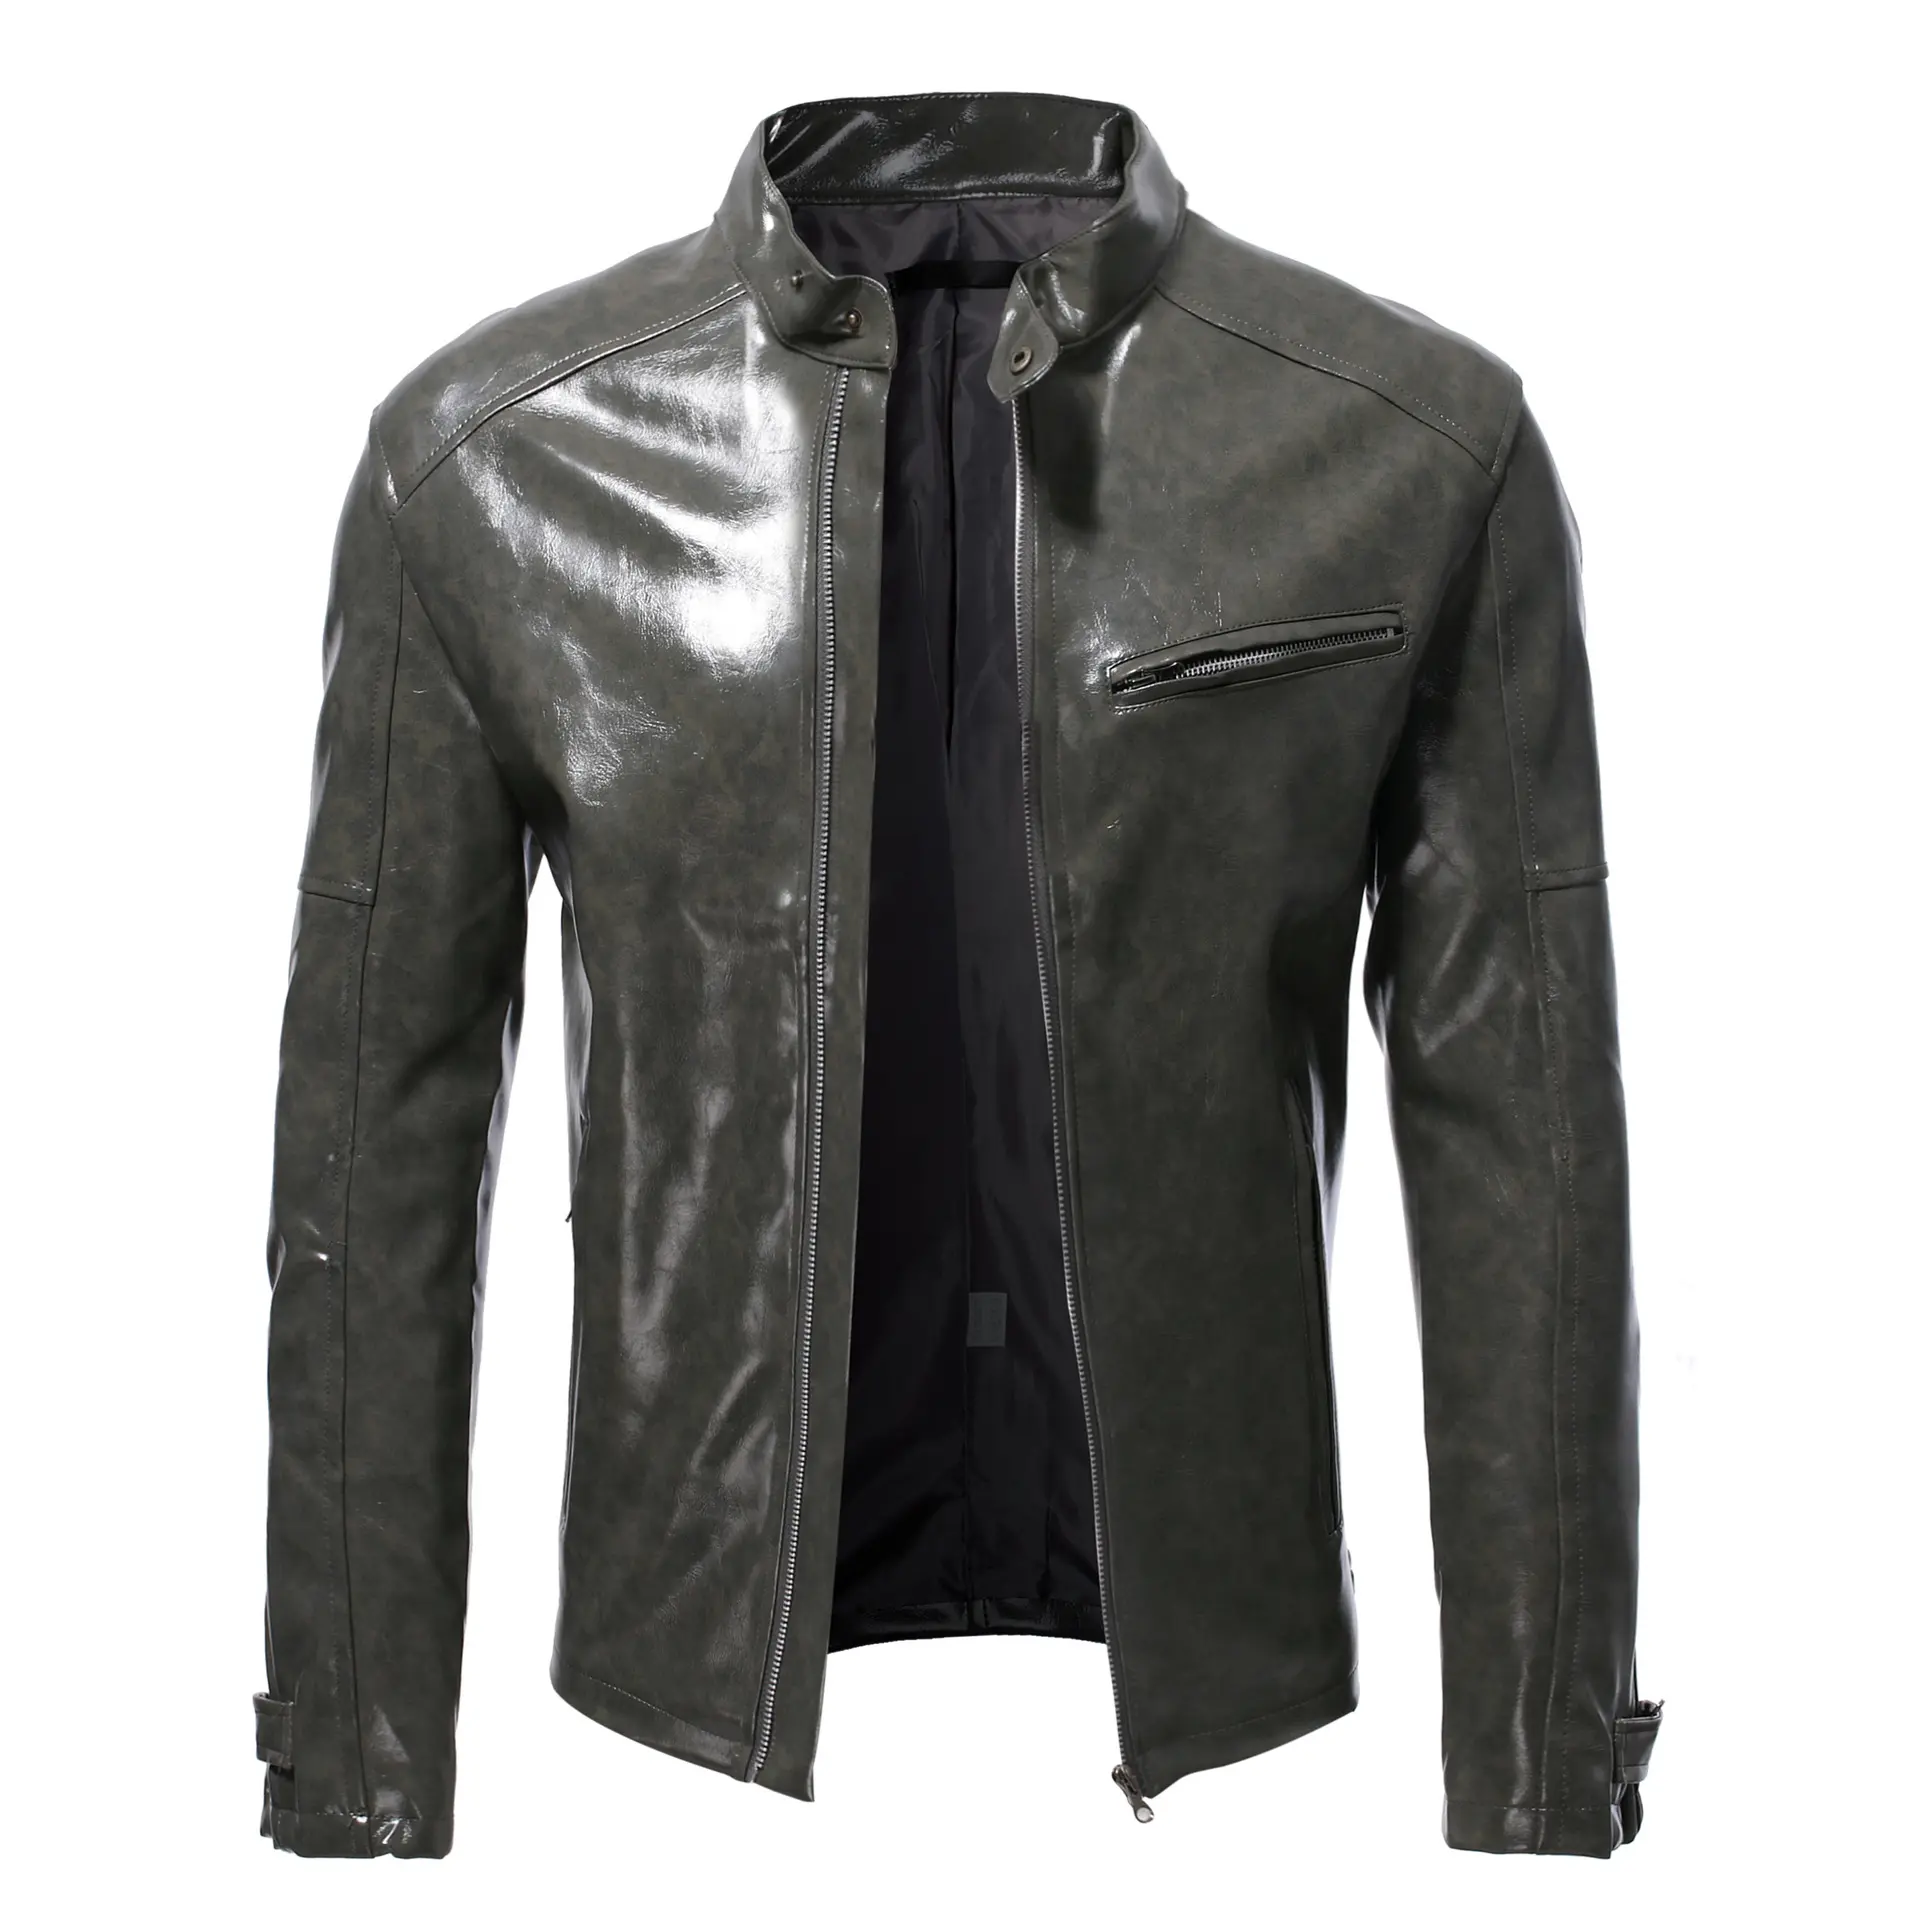 Entwerfen Sie Ihre eigenen Leder-Mode jacken Hochwertige Herren-Lederjacke zum besten Preis Langarm-Lederjacke